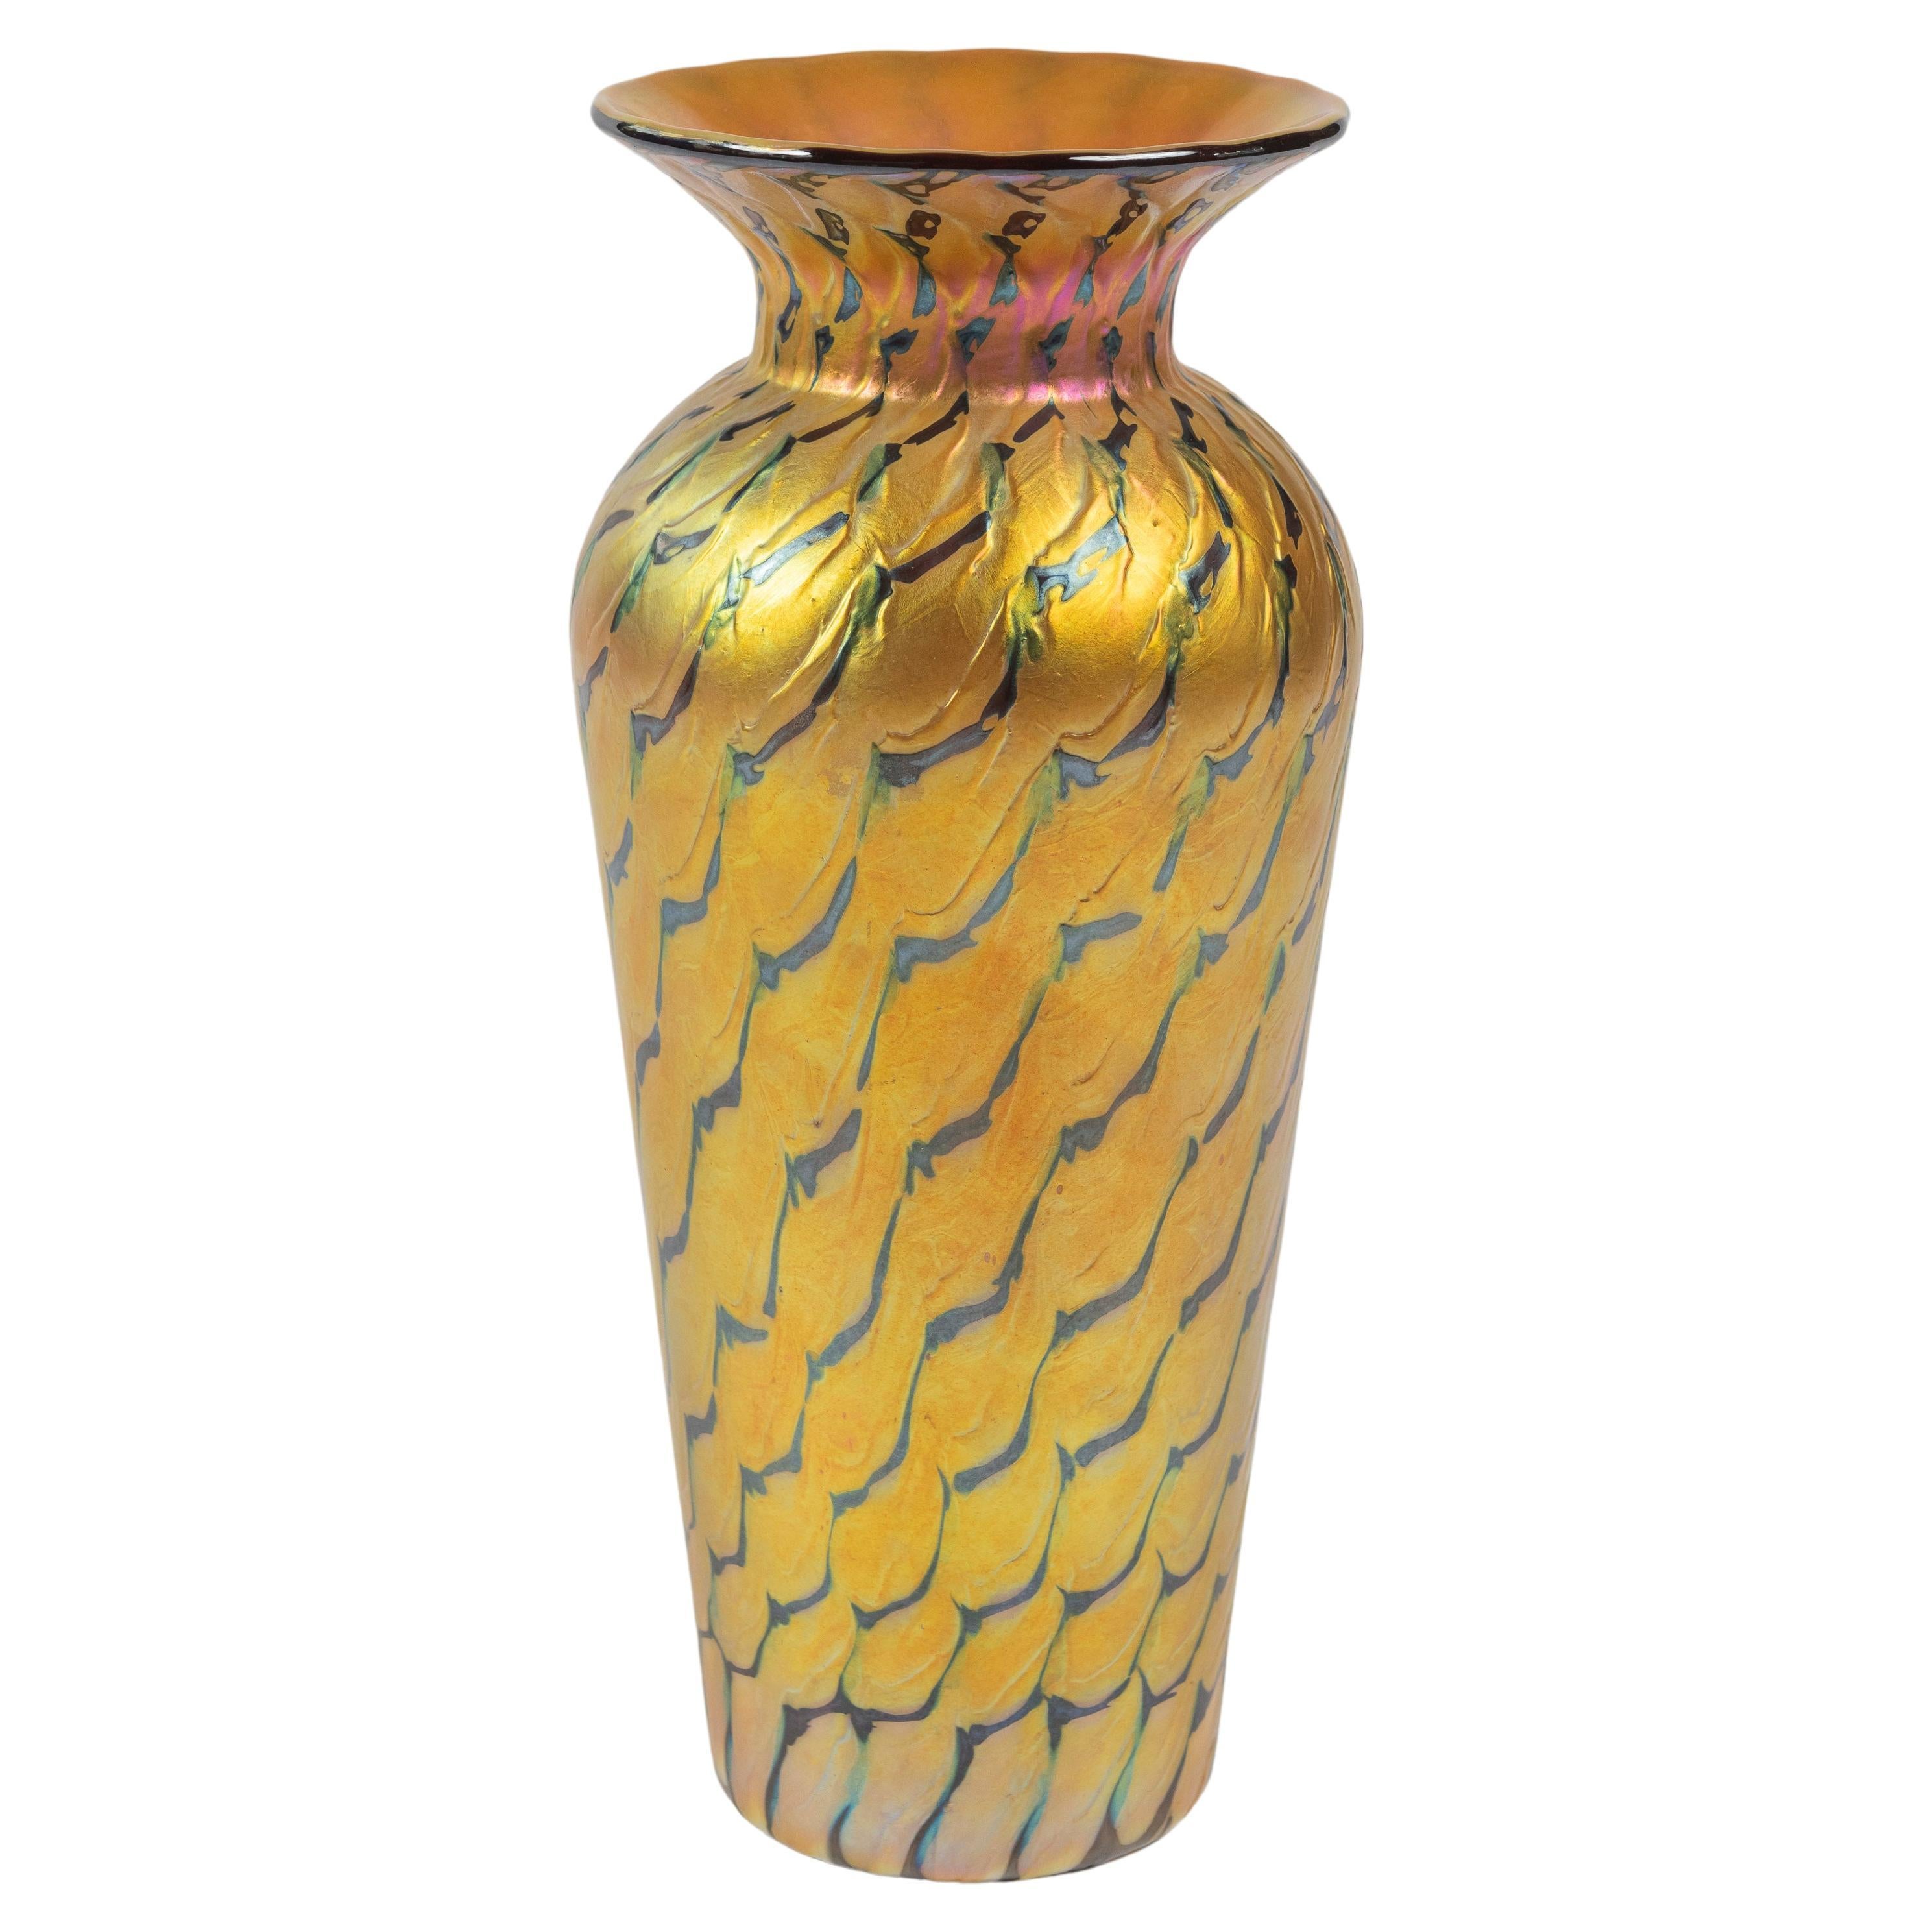 Gold and Green Iridescent Art Glass Vase, Lundberg Studios of California, Signed